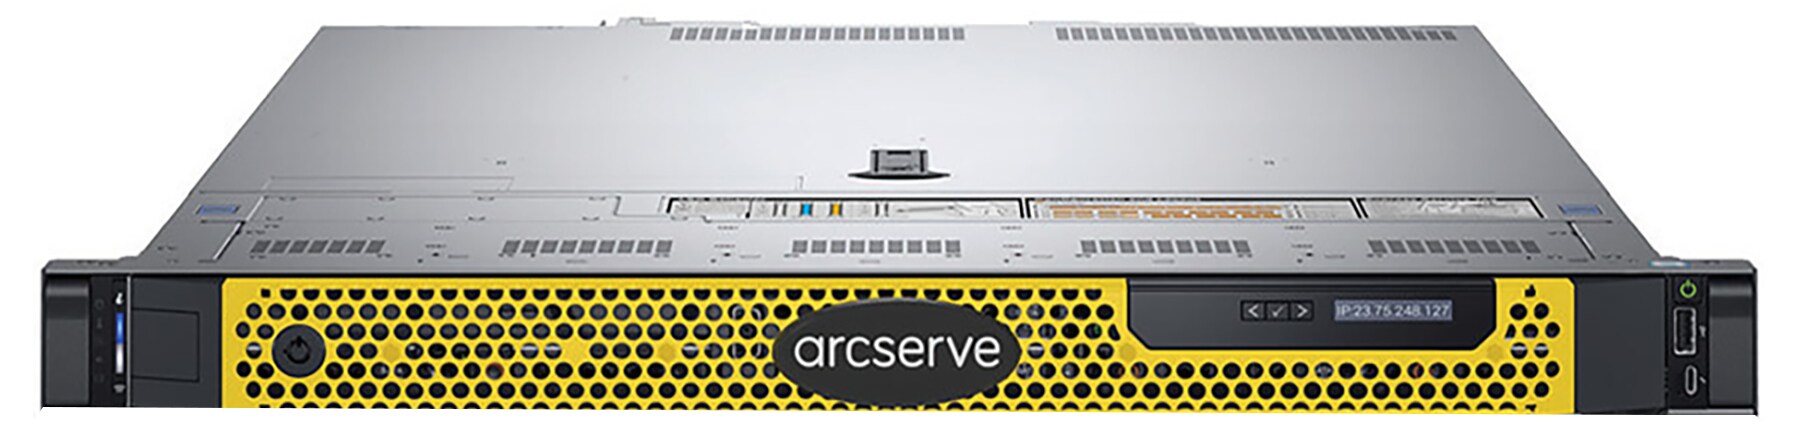 Arcserve 9024 1U Rackmount Appliance